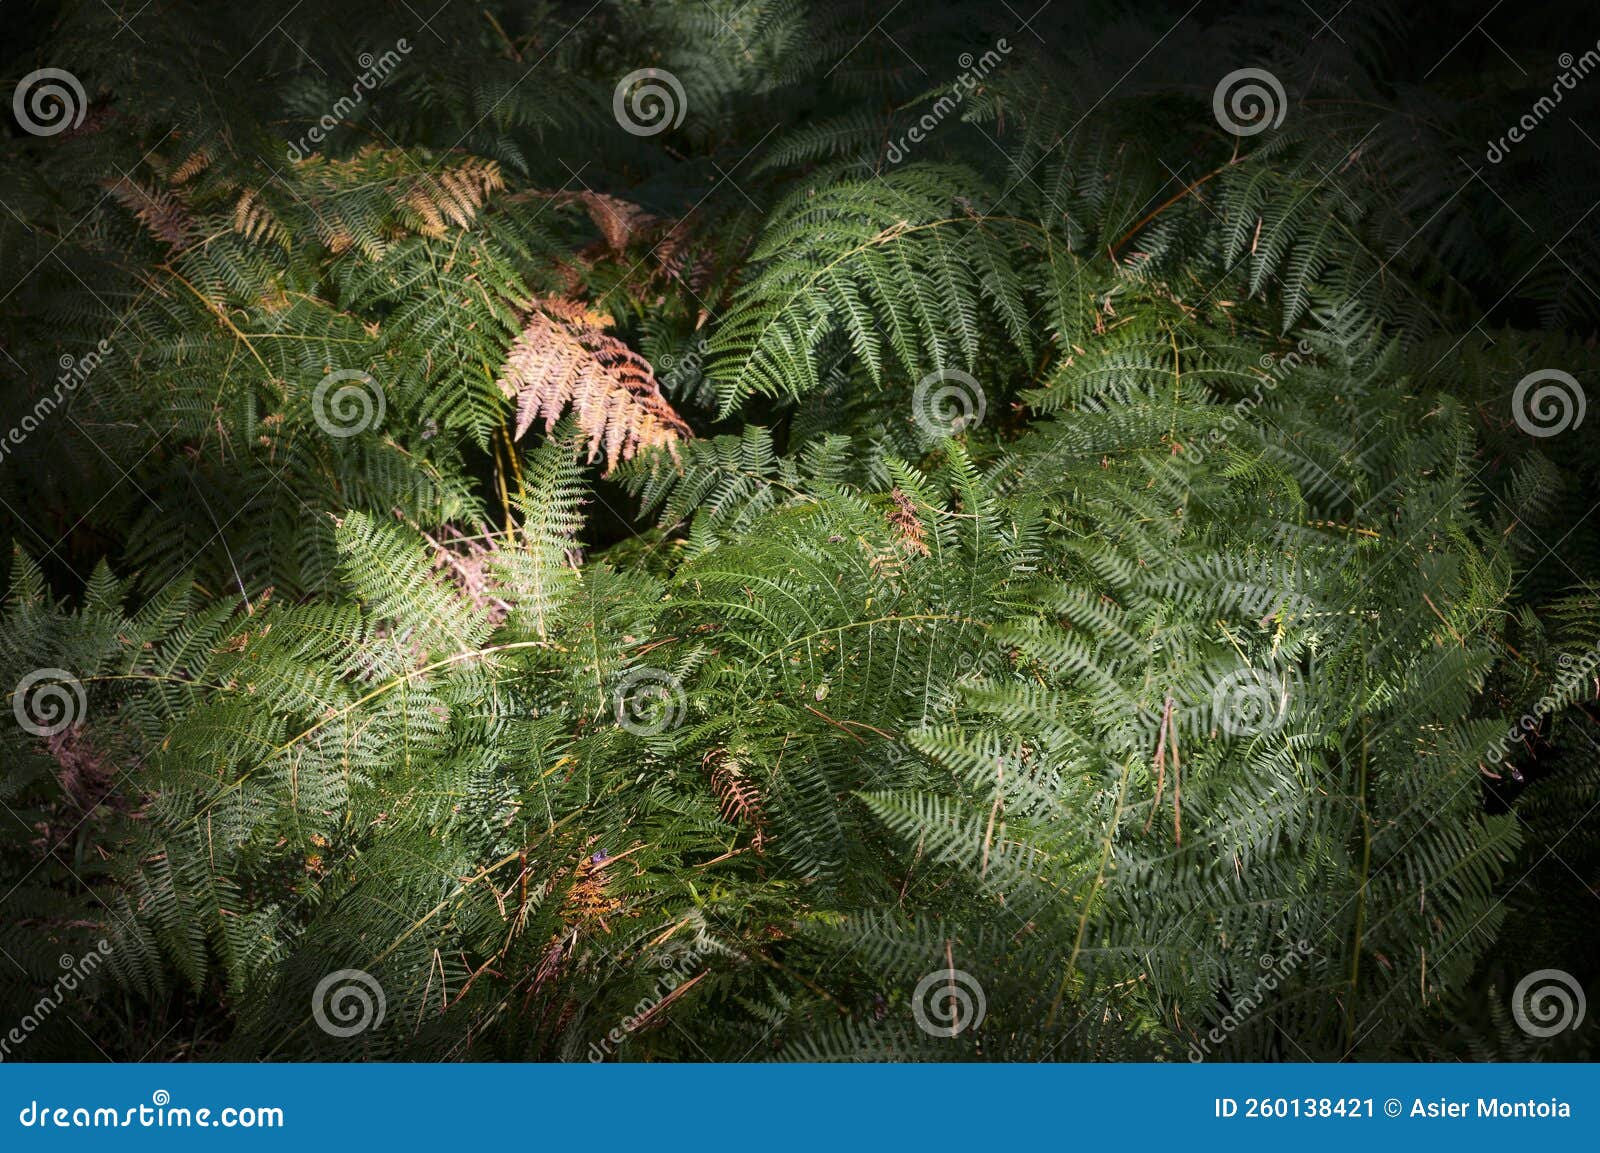 fern leaves polypodiopsida - poypodiophta